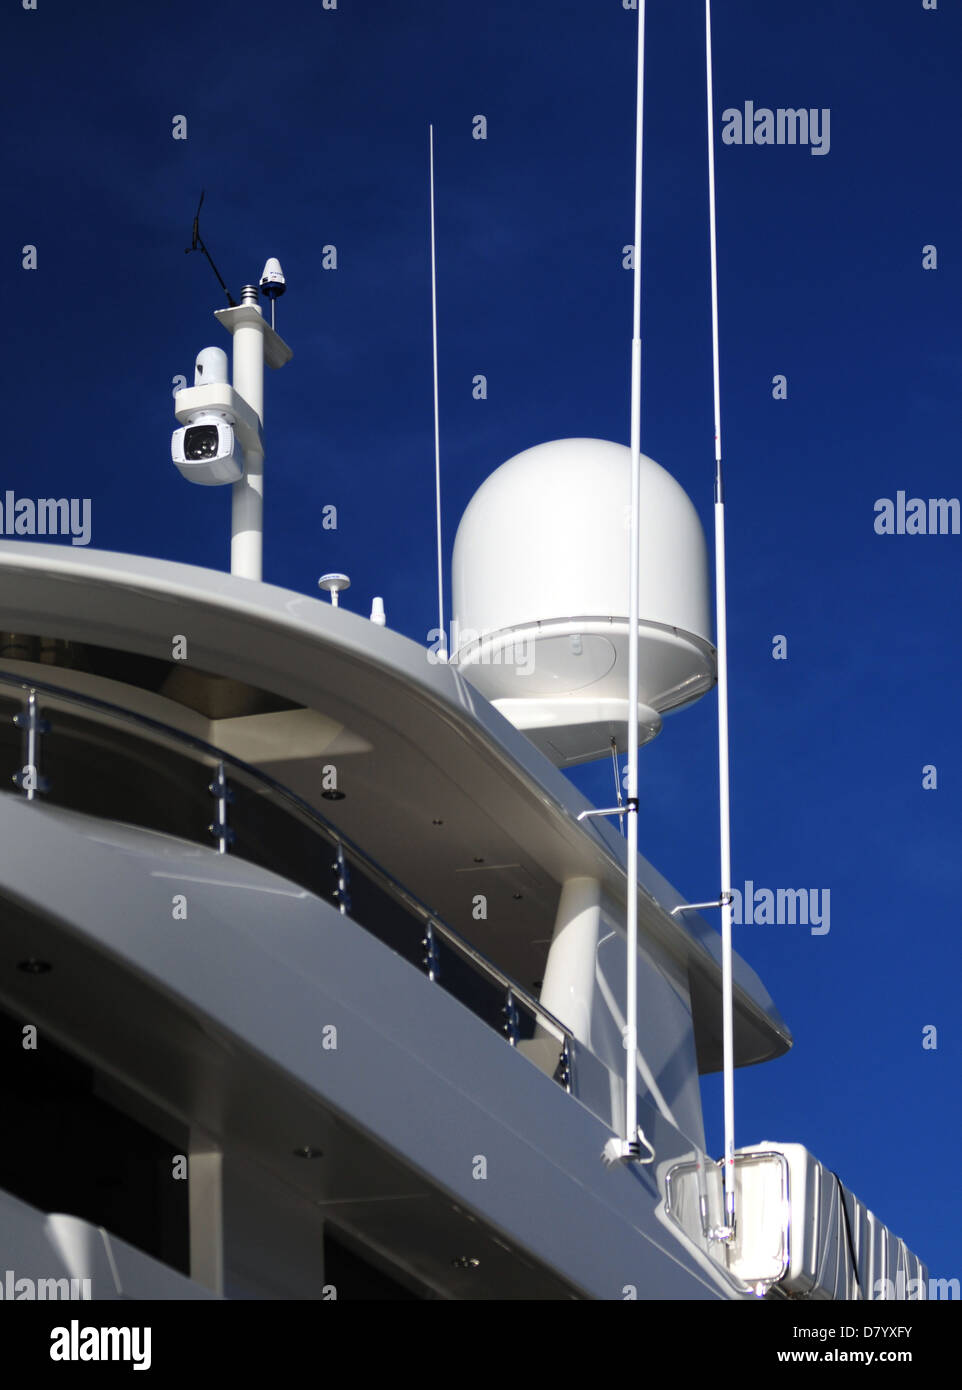 radar and night vision camera on yacht Stock Photo